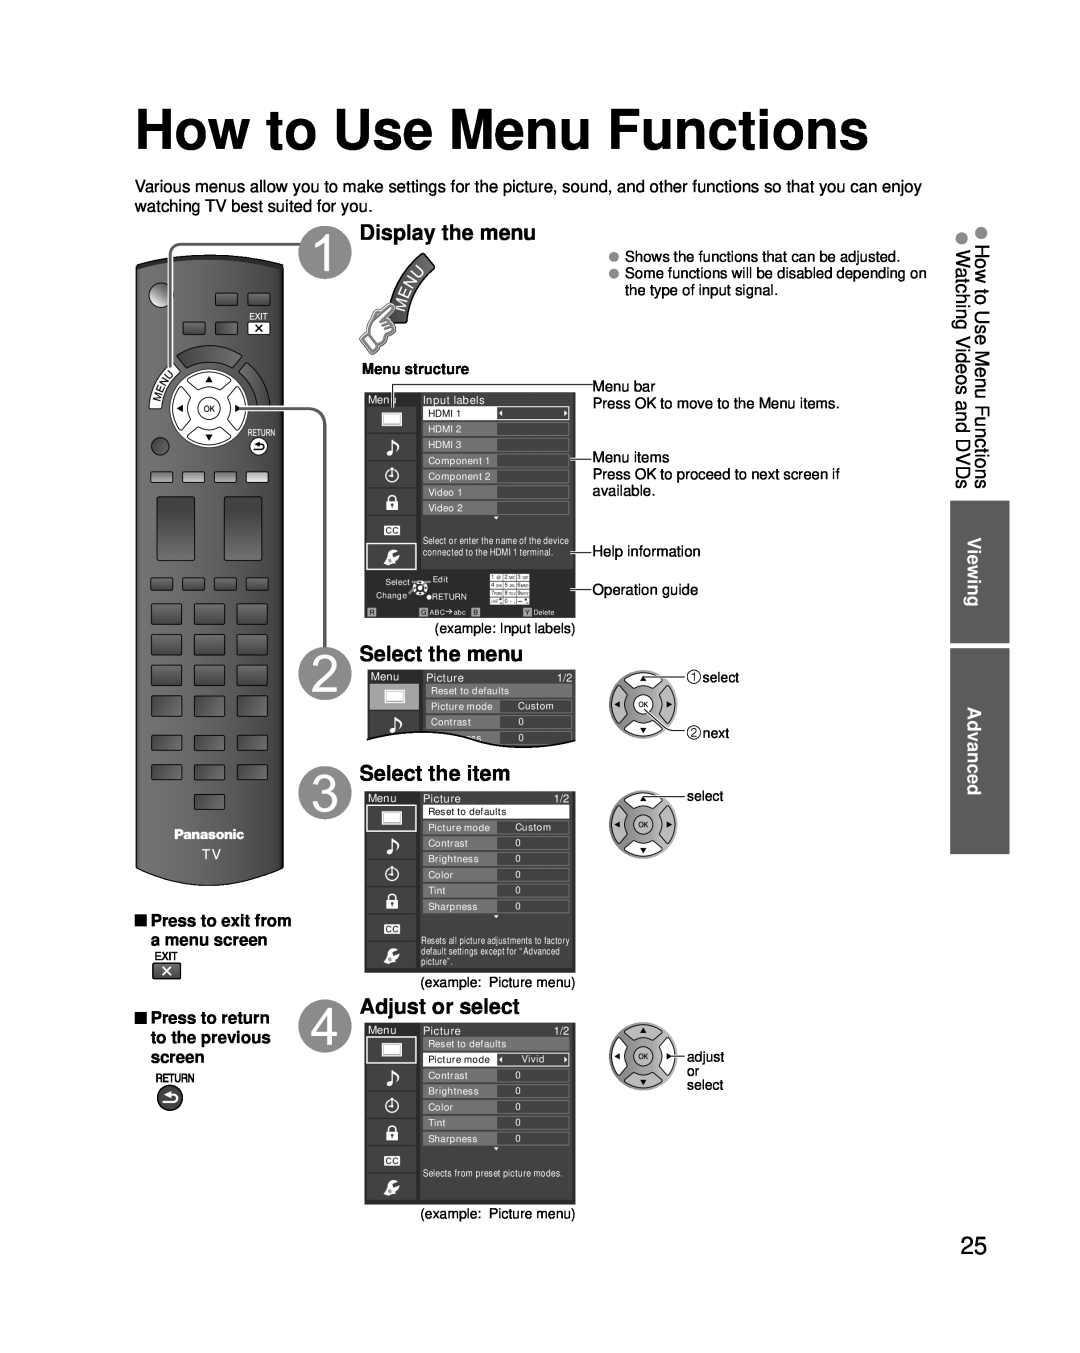 Panasonic TC-P50U2 How to Use Menu Functions, Display the menu, Select the menu, Select the item, Adjust or select, screen 